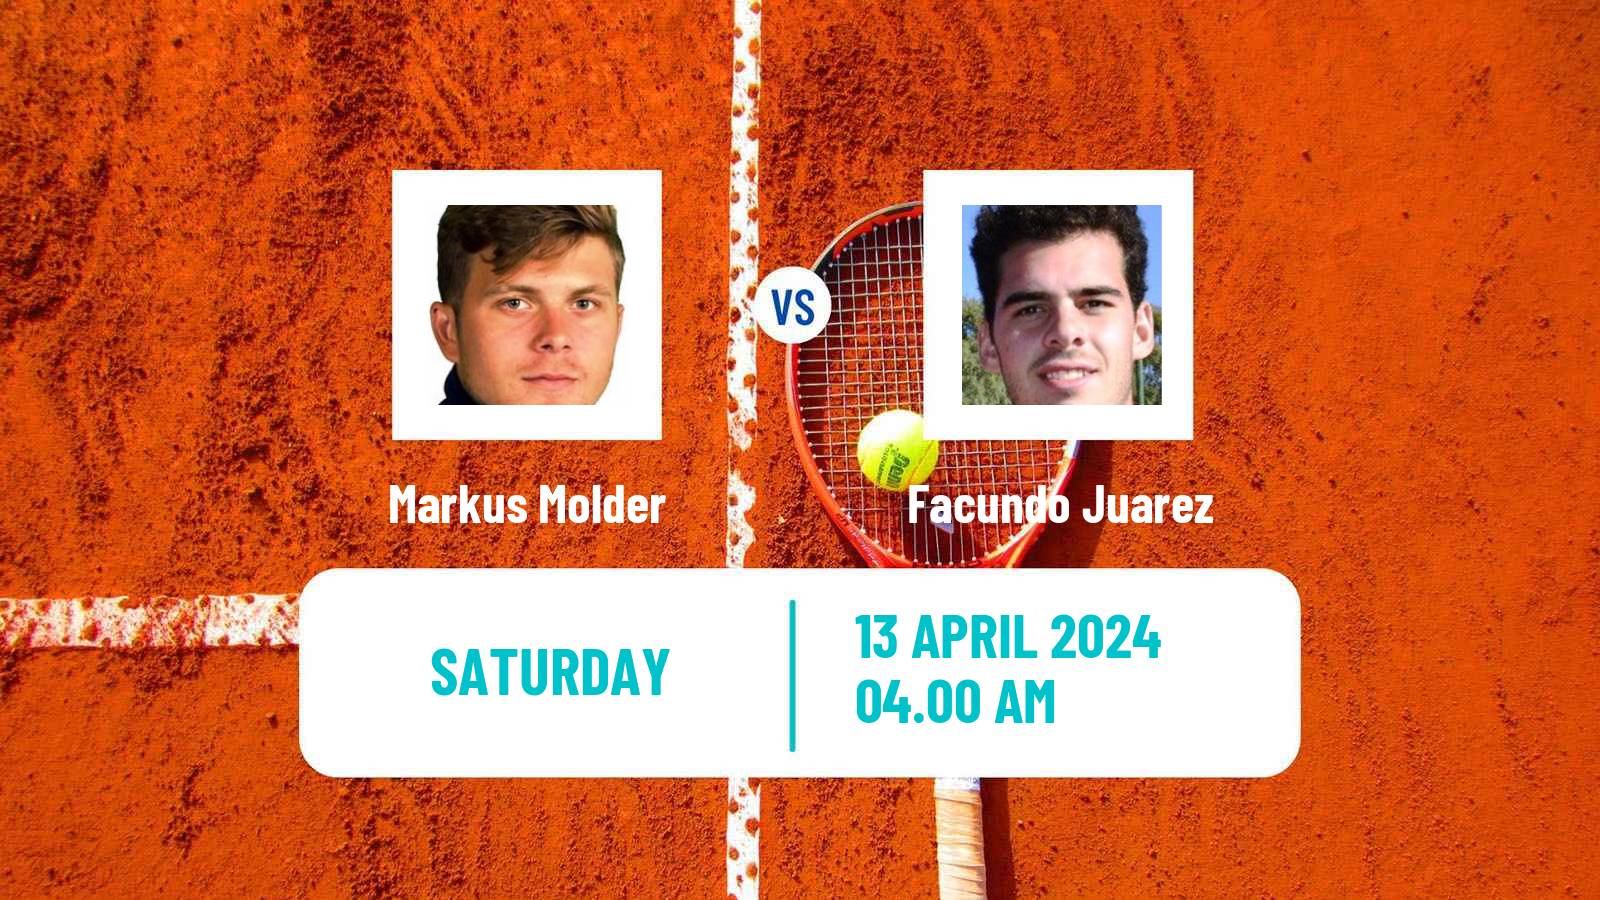 Tennis ITF M15 Antalya 10 Men Markus Molder - Facundo Juarez